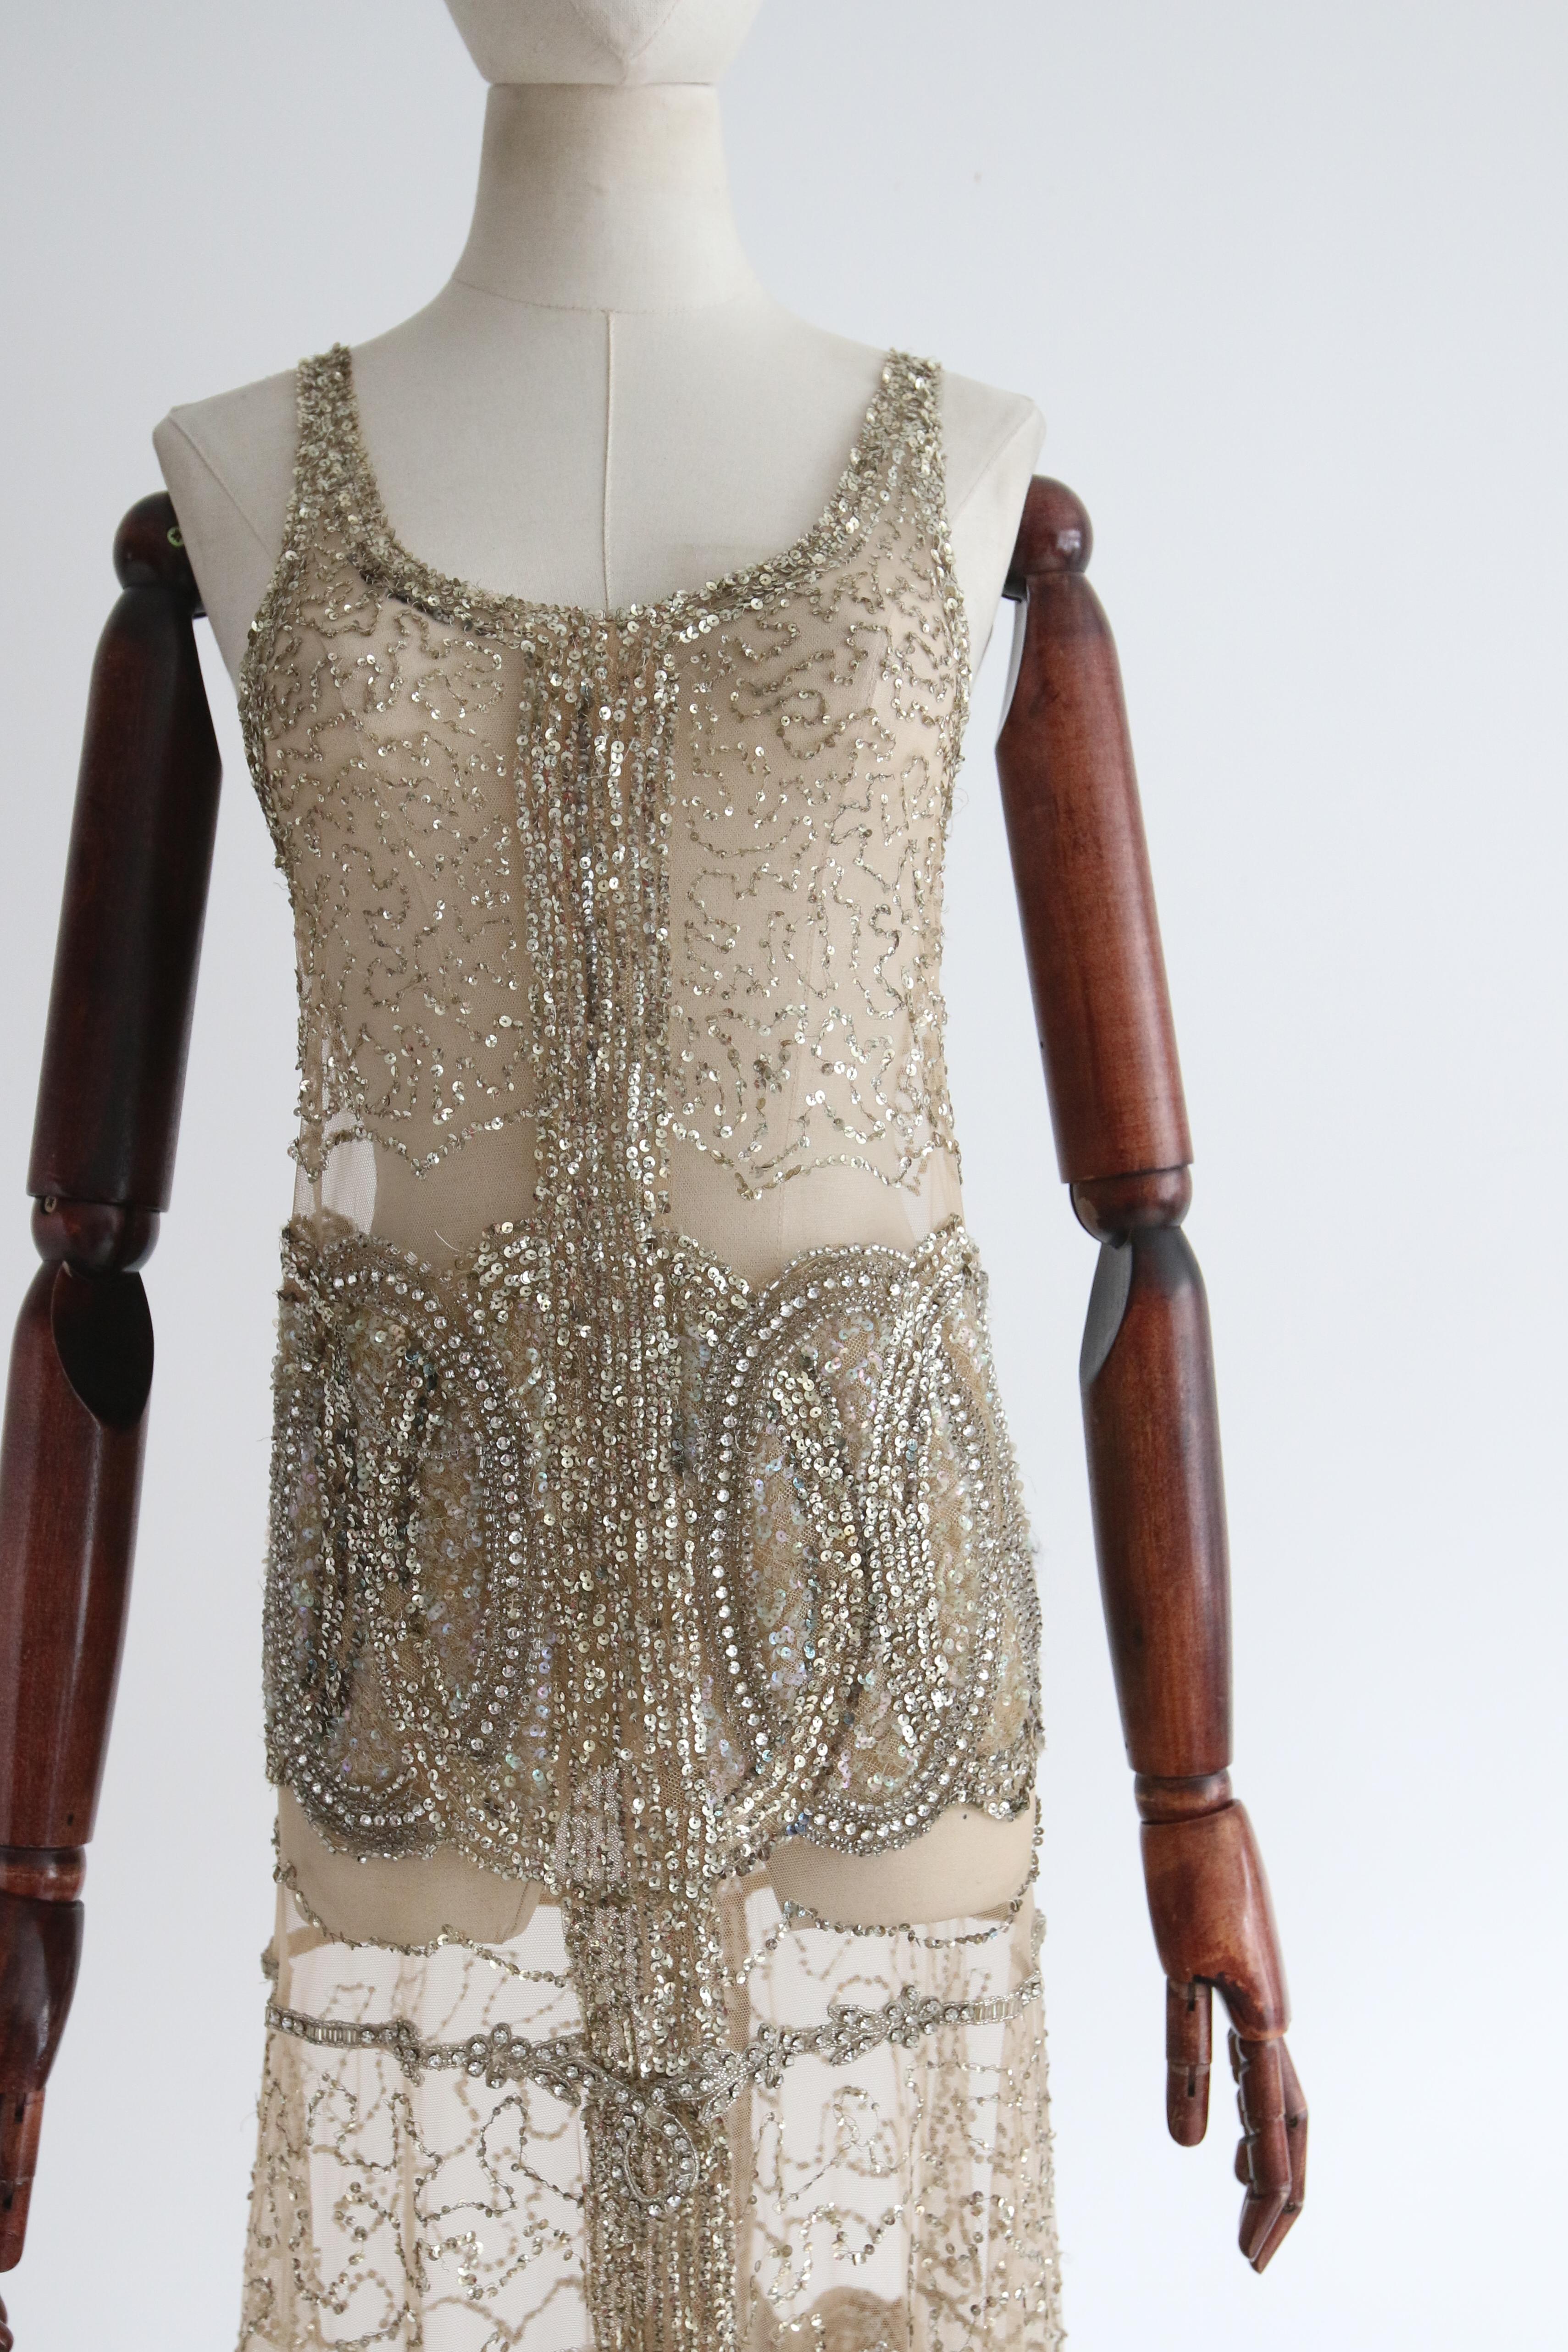 Women's or Men's Vintage 1920's Gold Beaded Sequin Dress Flapper Dress UK 6-8 US 2-4 For Sale